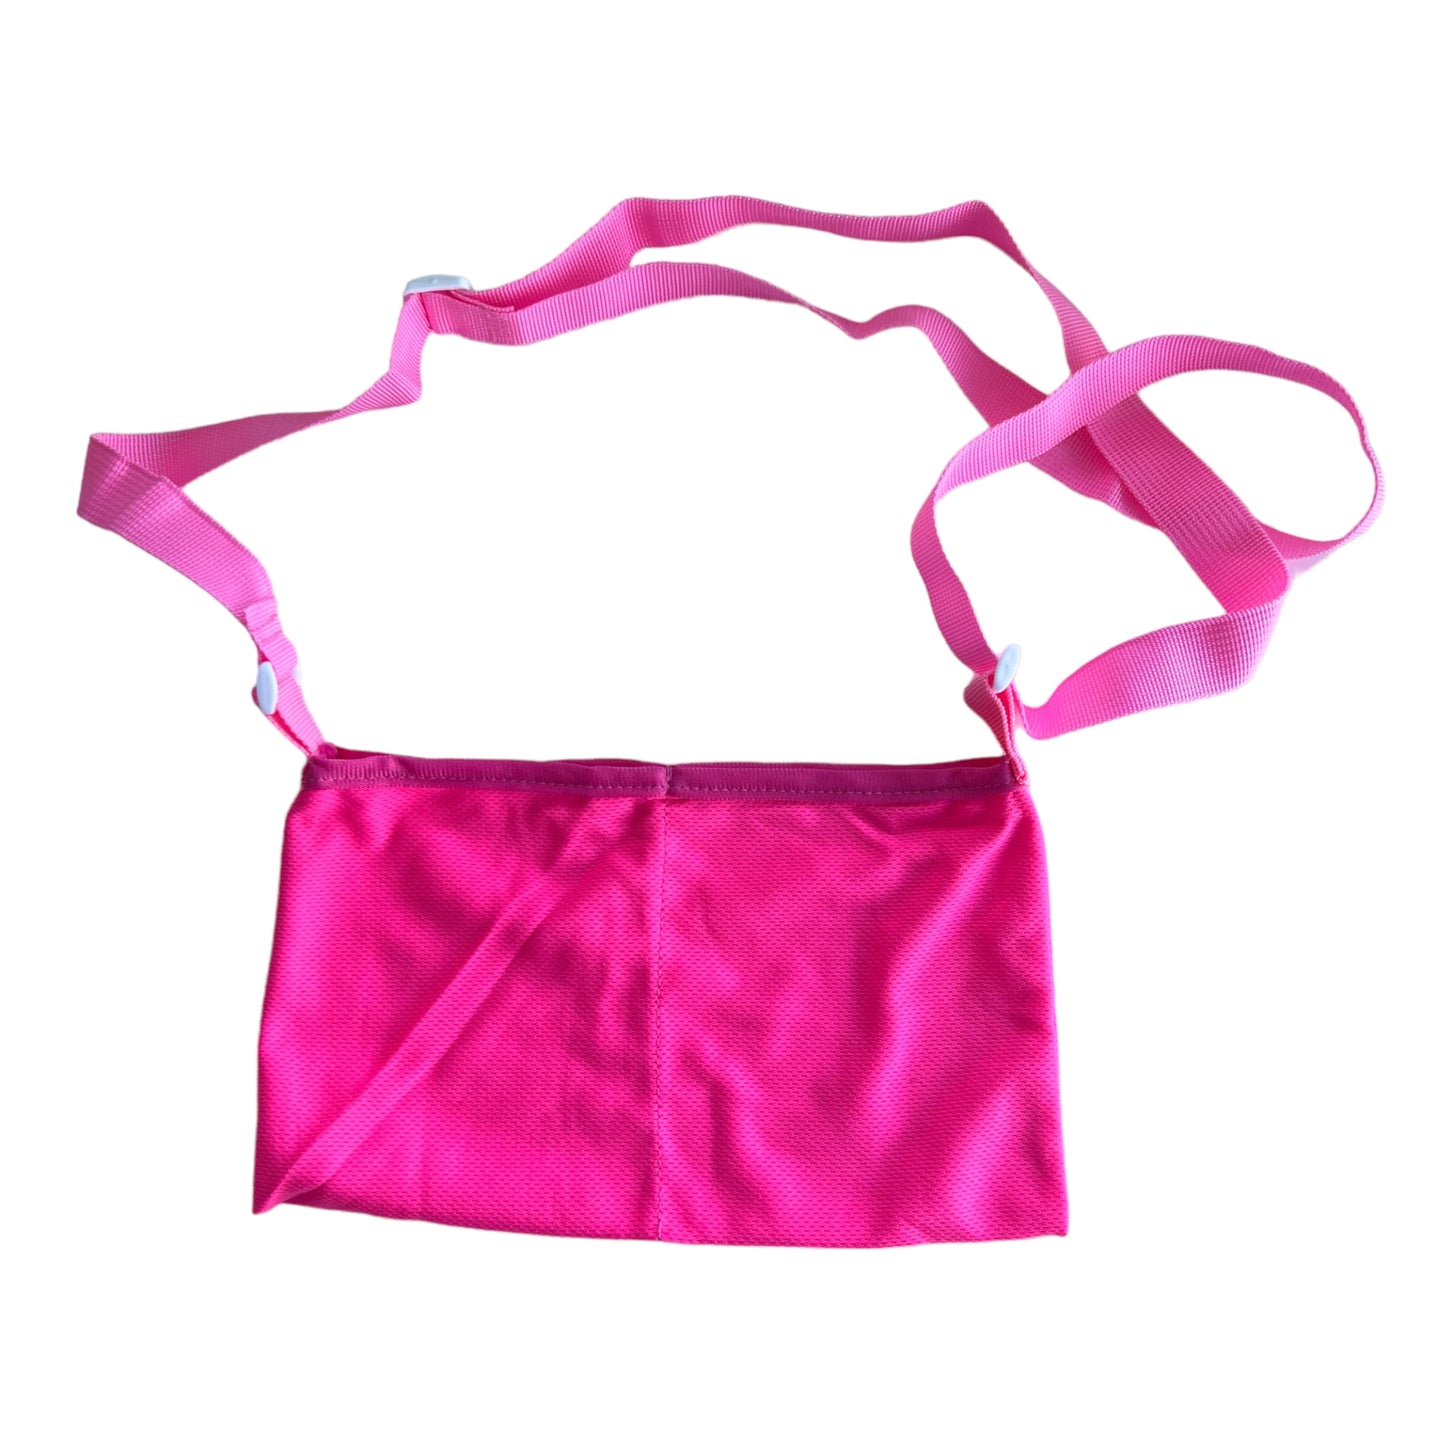 Post-Mastectomy Drain Bag Holder